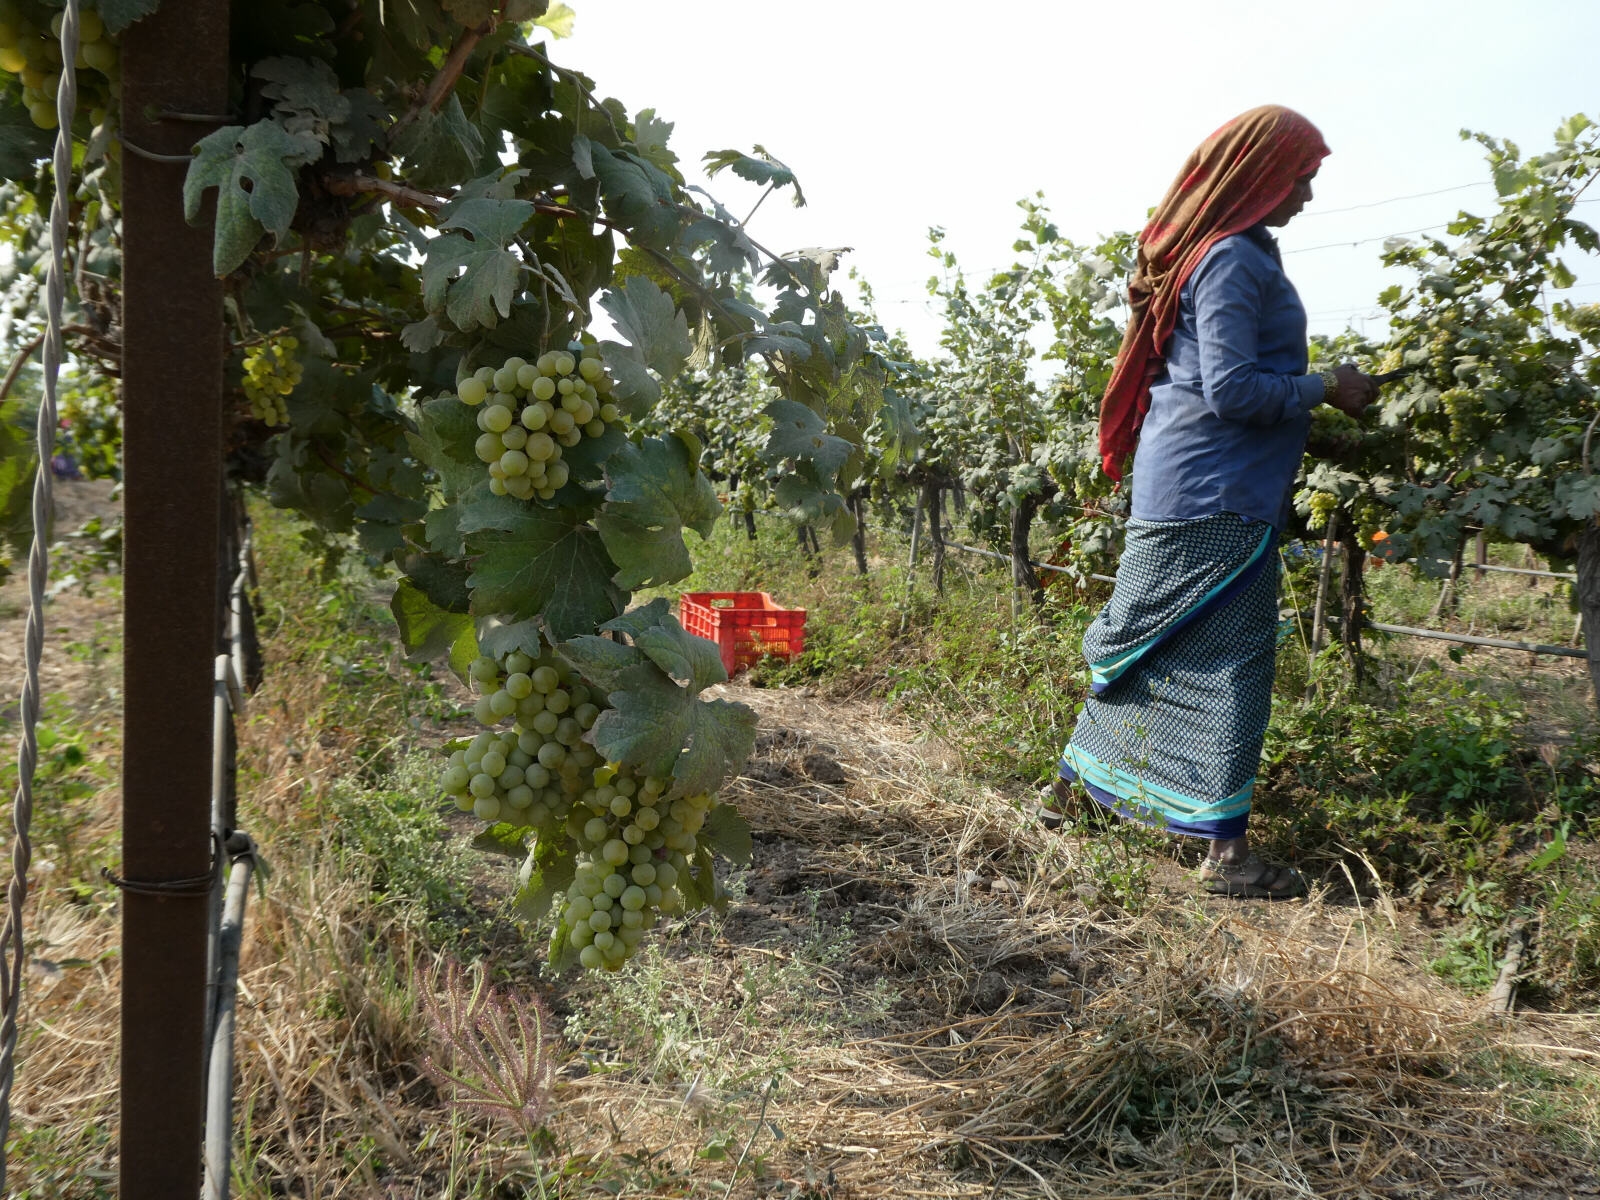 Picking grapes at Fratelli vineyard, India